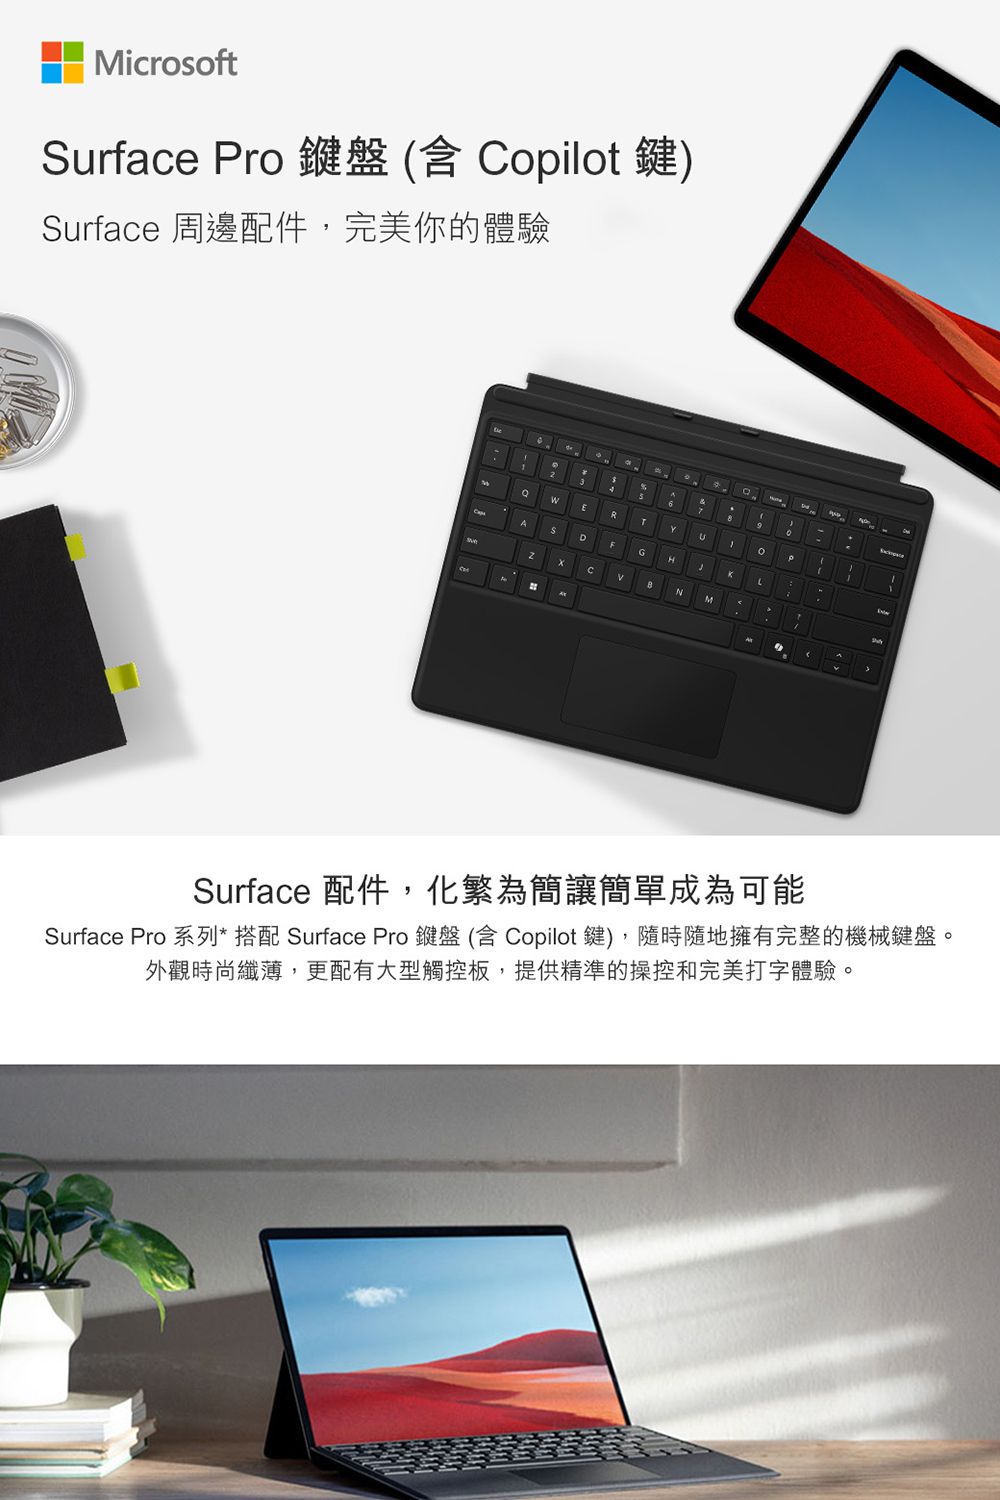 MicrosoftSurface ro 鍵盤(含 opilot鍵)Surface 周邊配件完美你的體驗ARTYDFGHLCNMPSurface 配件,化繁為簡讓簡單成為可能Surface Pro 系列*搭配 Surface Pro 鍵盤(含 Copilot鍵),隨時隨地擁有完整的機械鍵盤。外觀時尚纖薄,更配有大型觸控板,提供精準的操控和完美打字體驗。